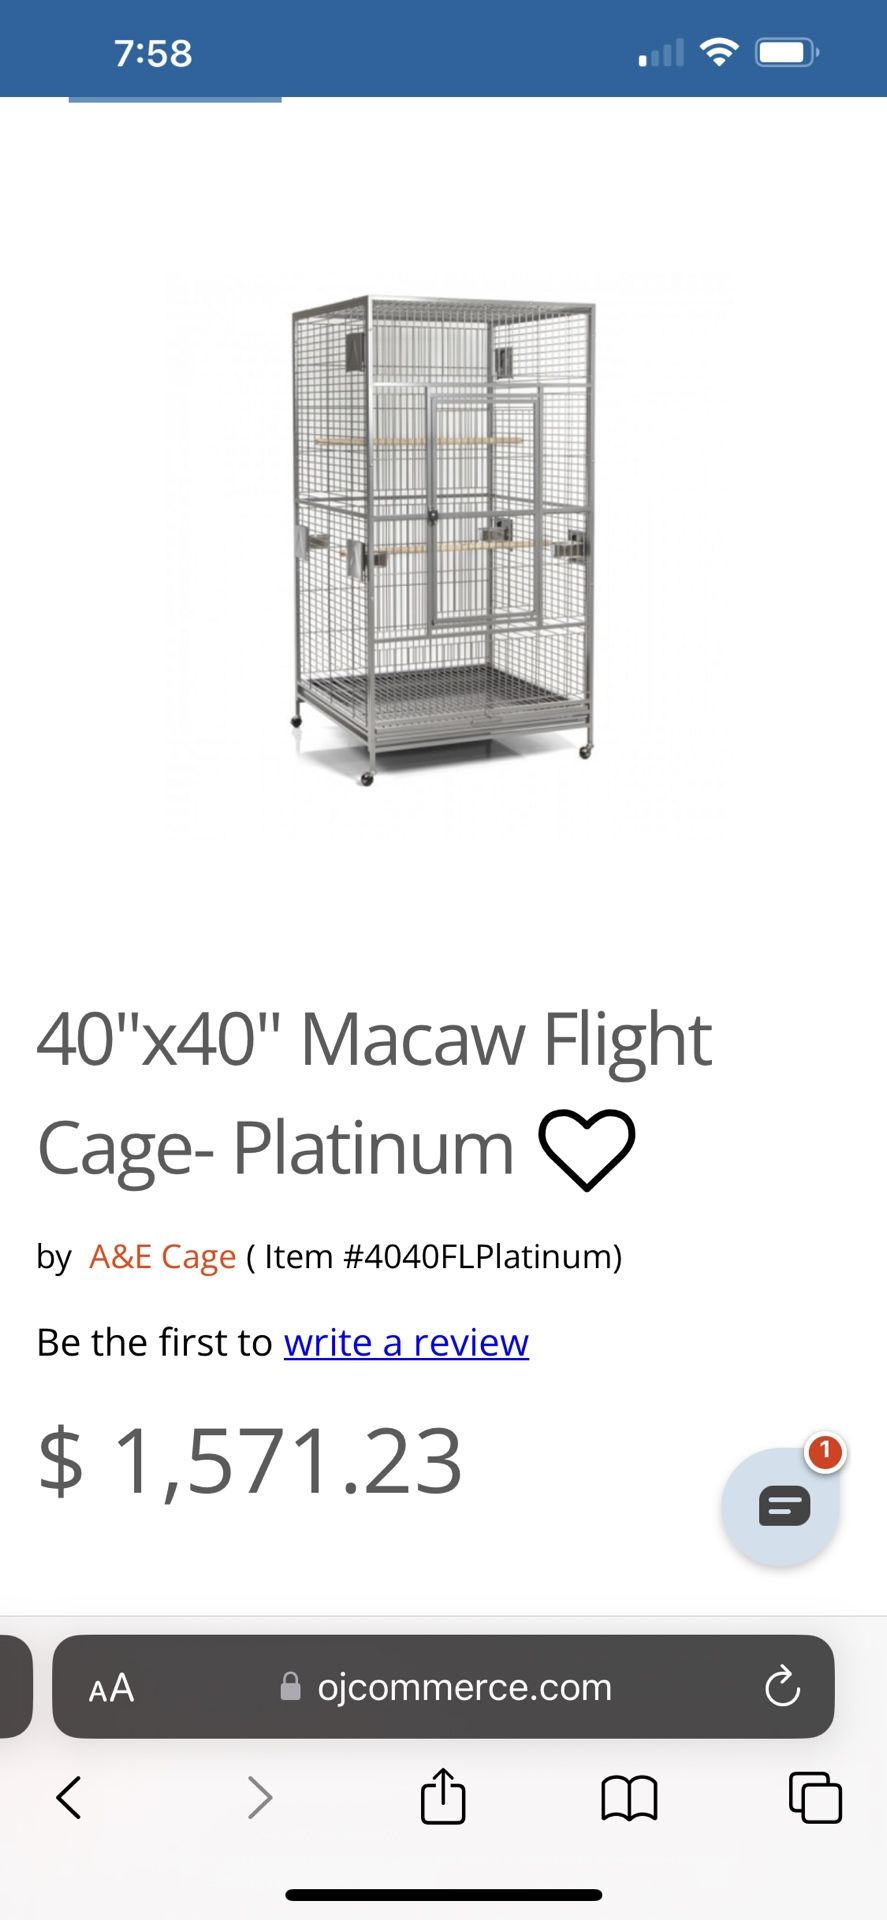 Extra Large Bird Cage 